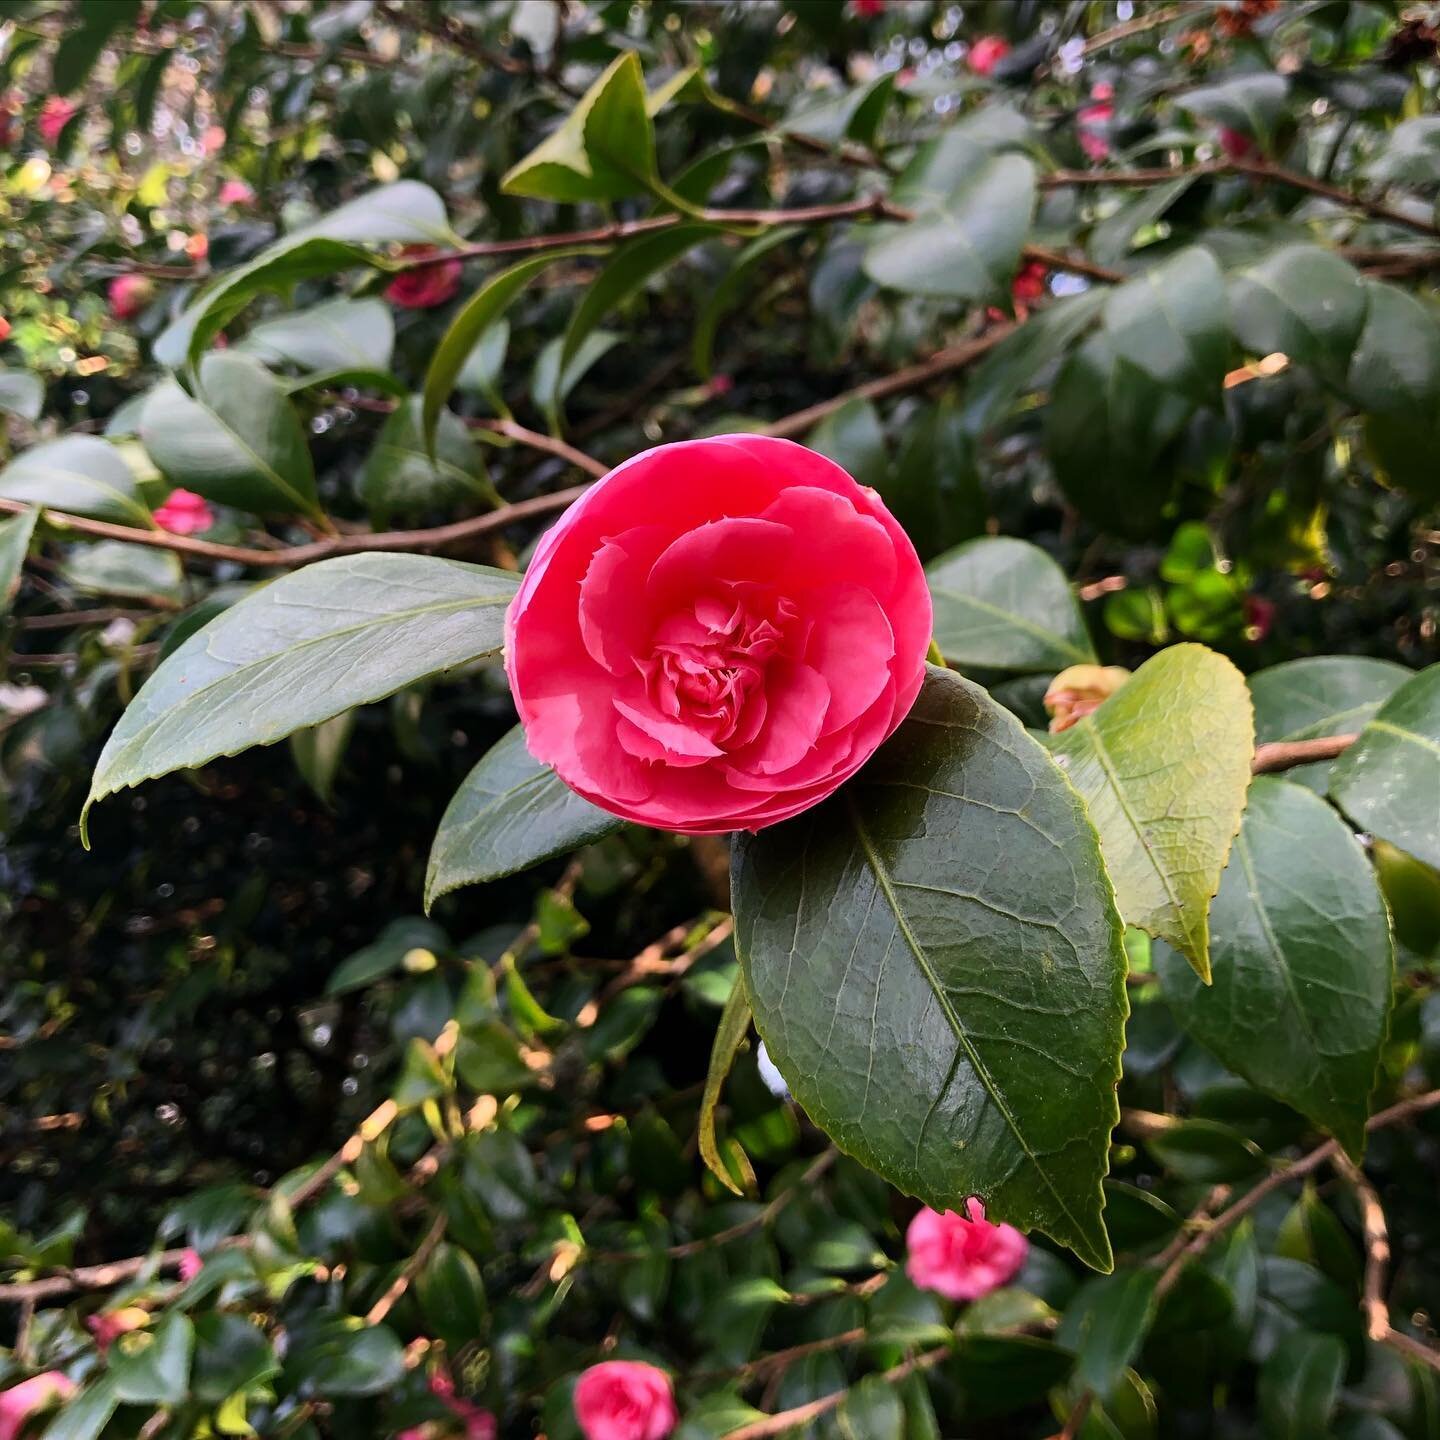 Definitely Camellia season @bloedelreserve